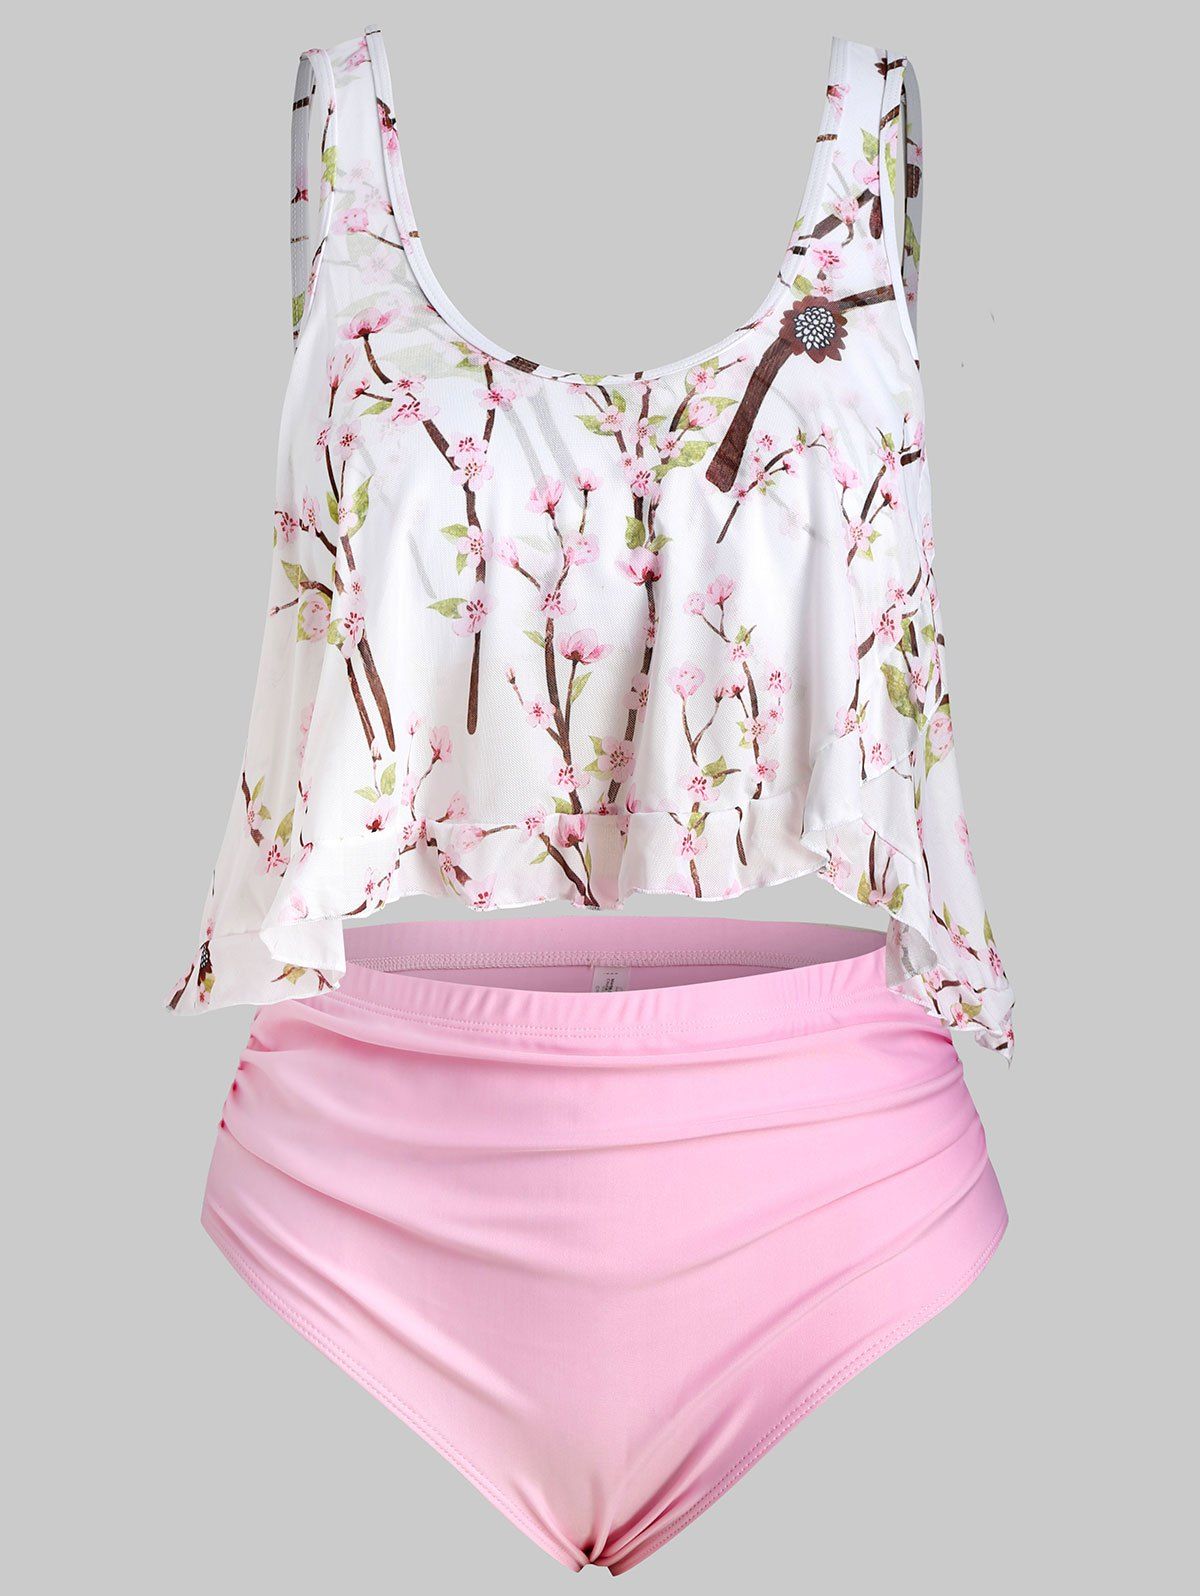 Plus Size Peach Blossom Overlay Tankini Swimsuit - PINK 5X